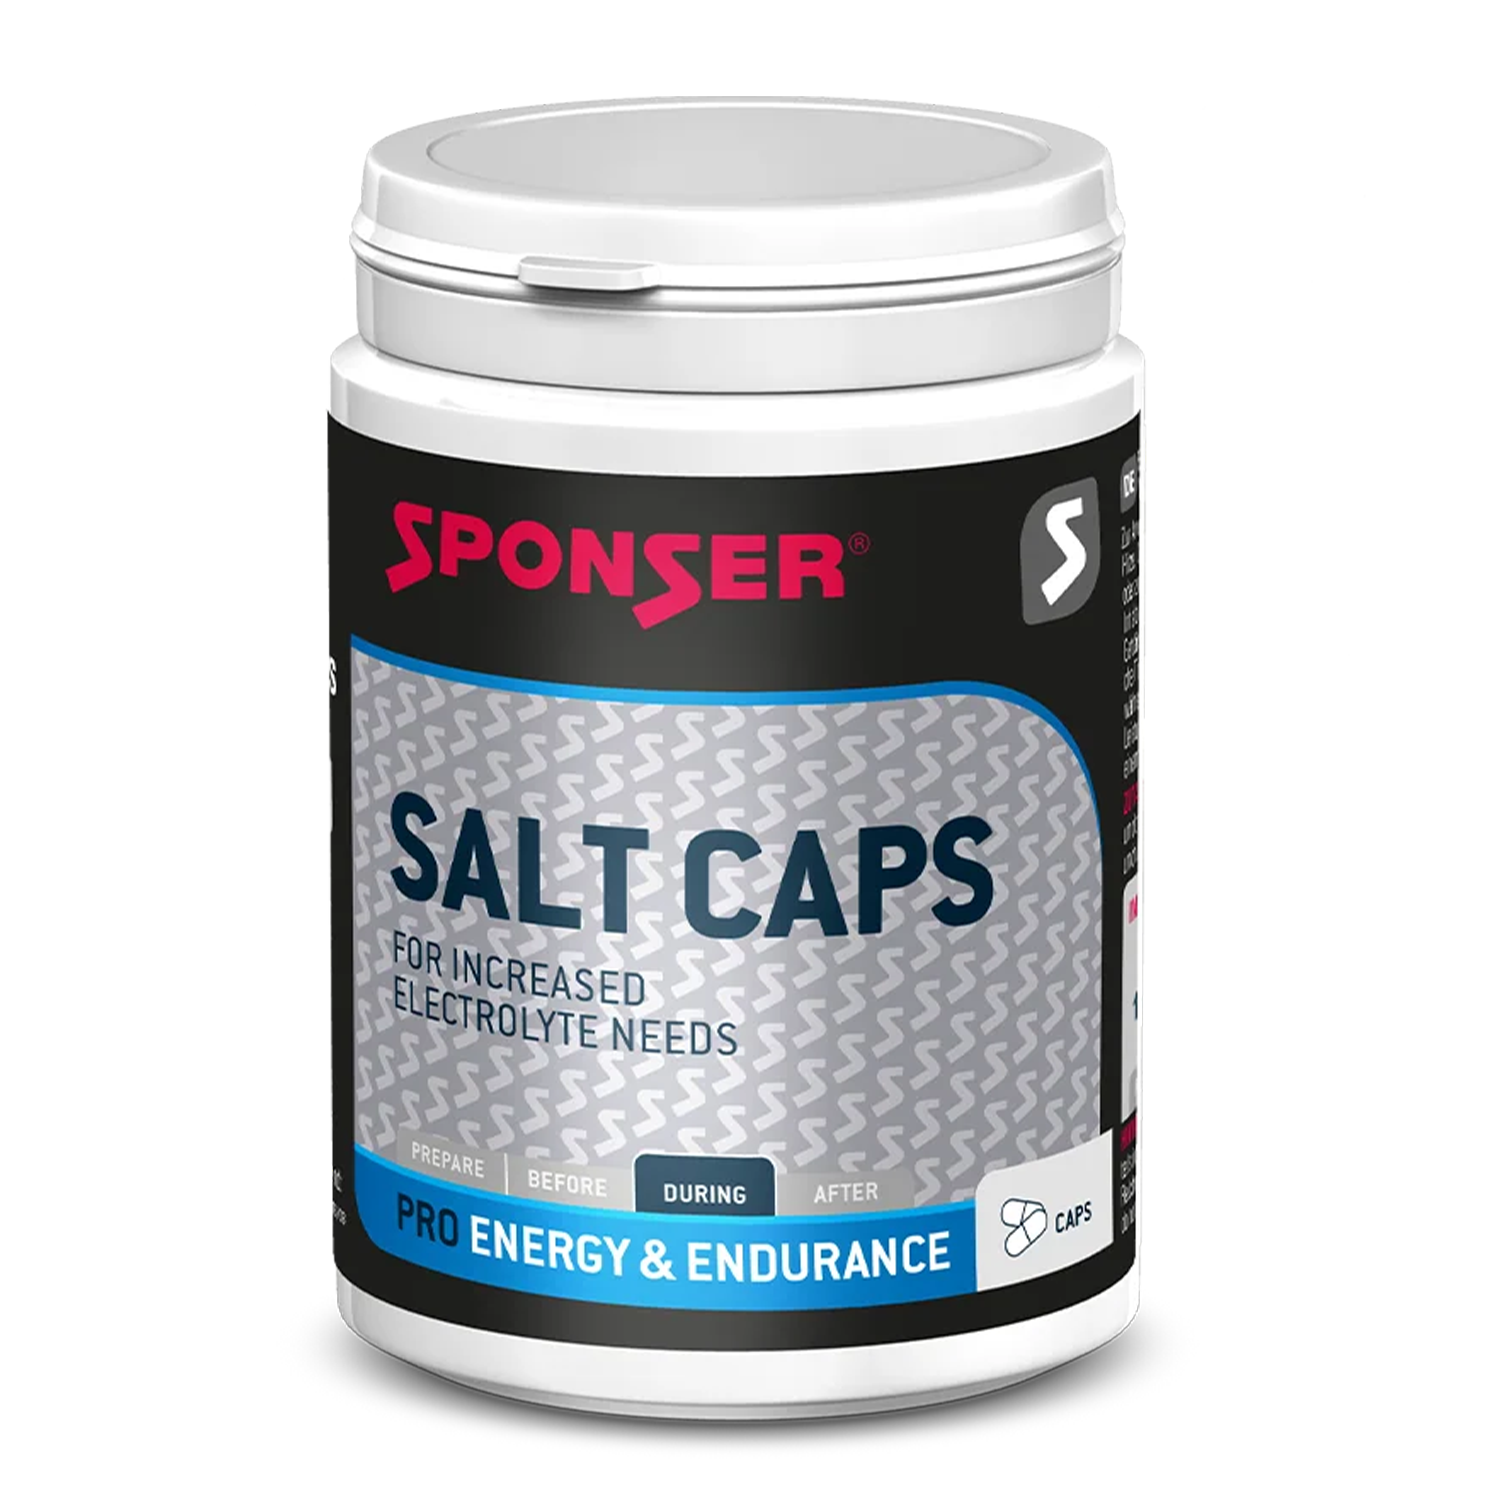 Sponser capsulas de sal